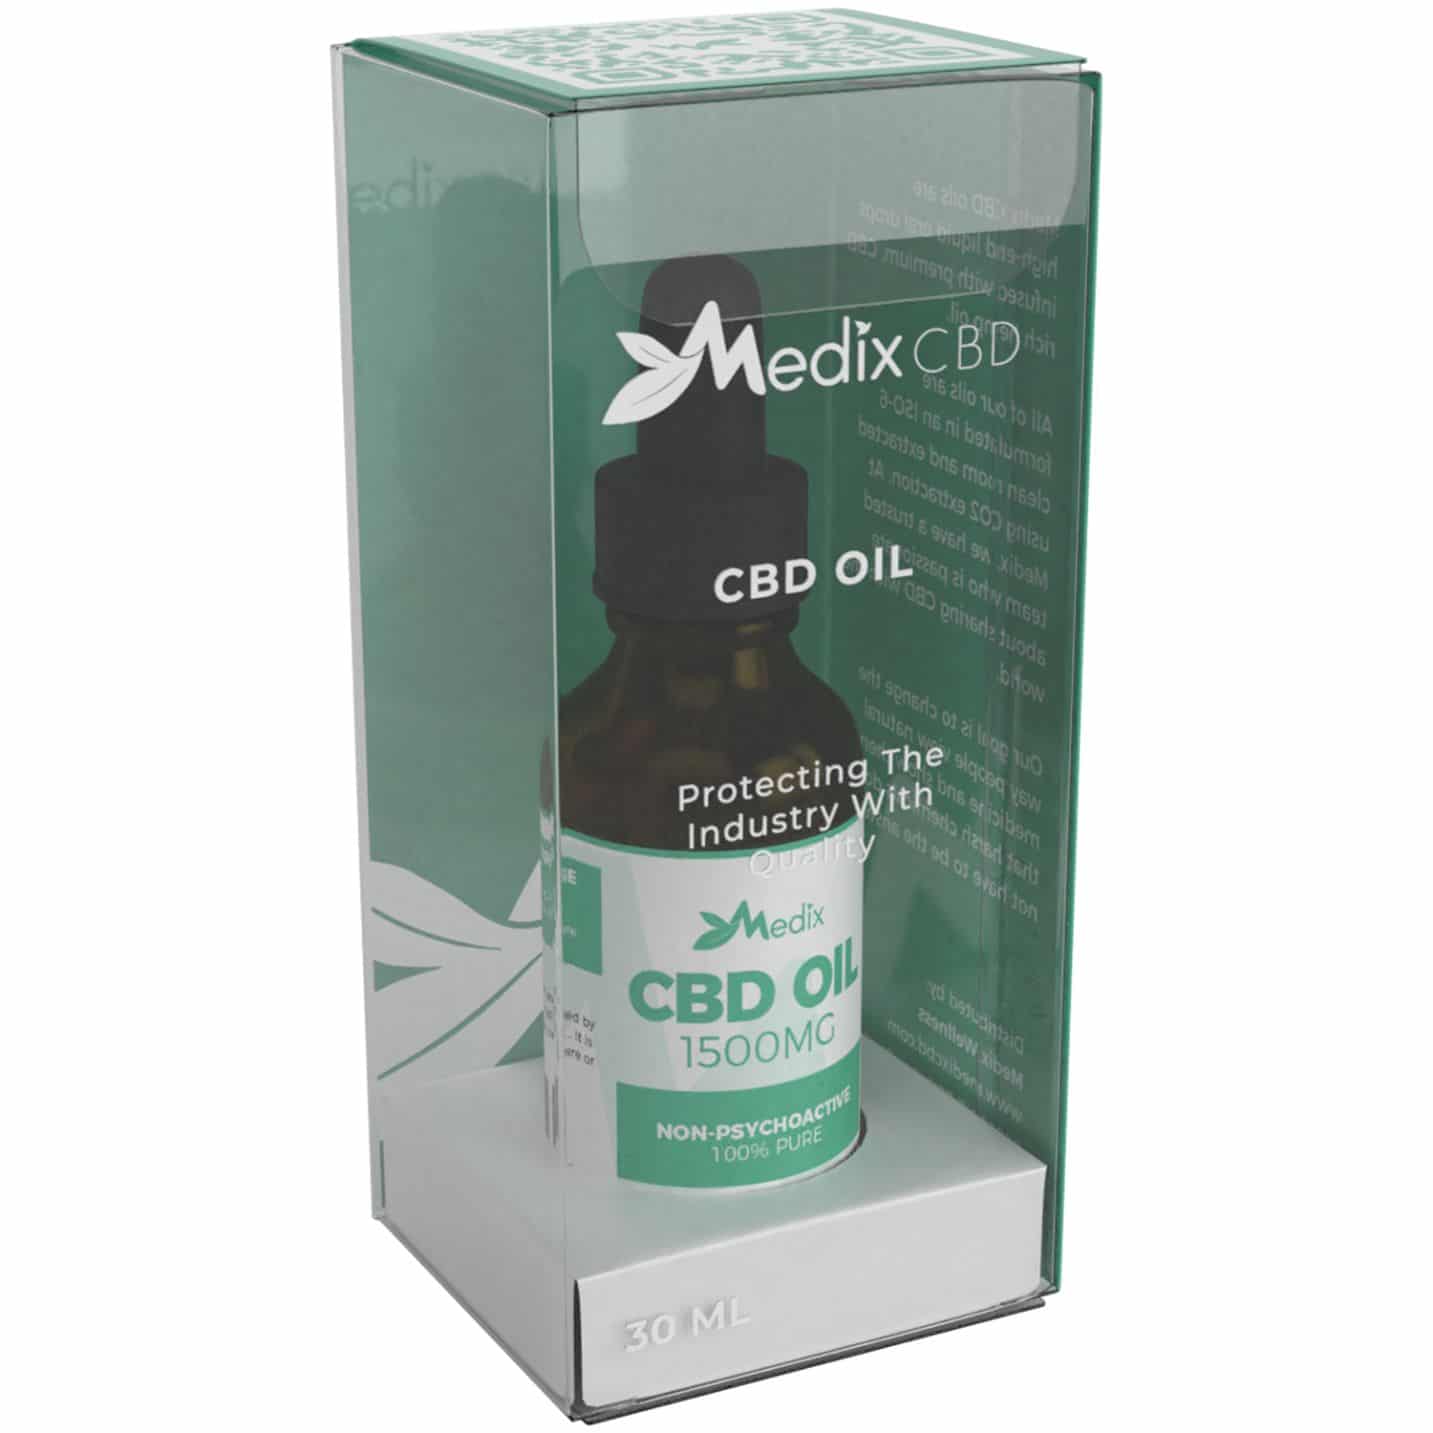 Medix’s CBD Oil